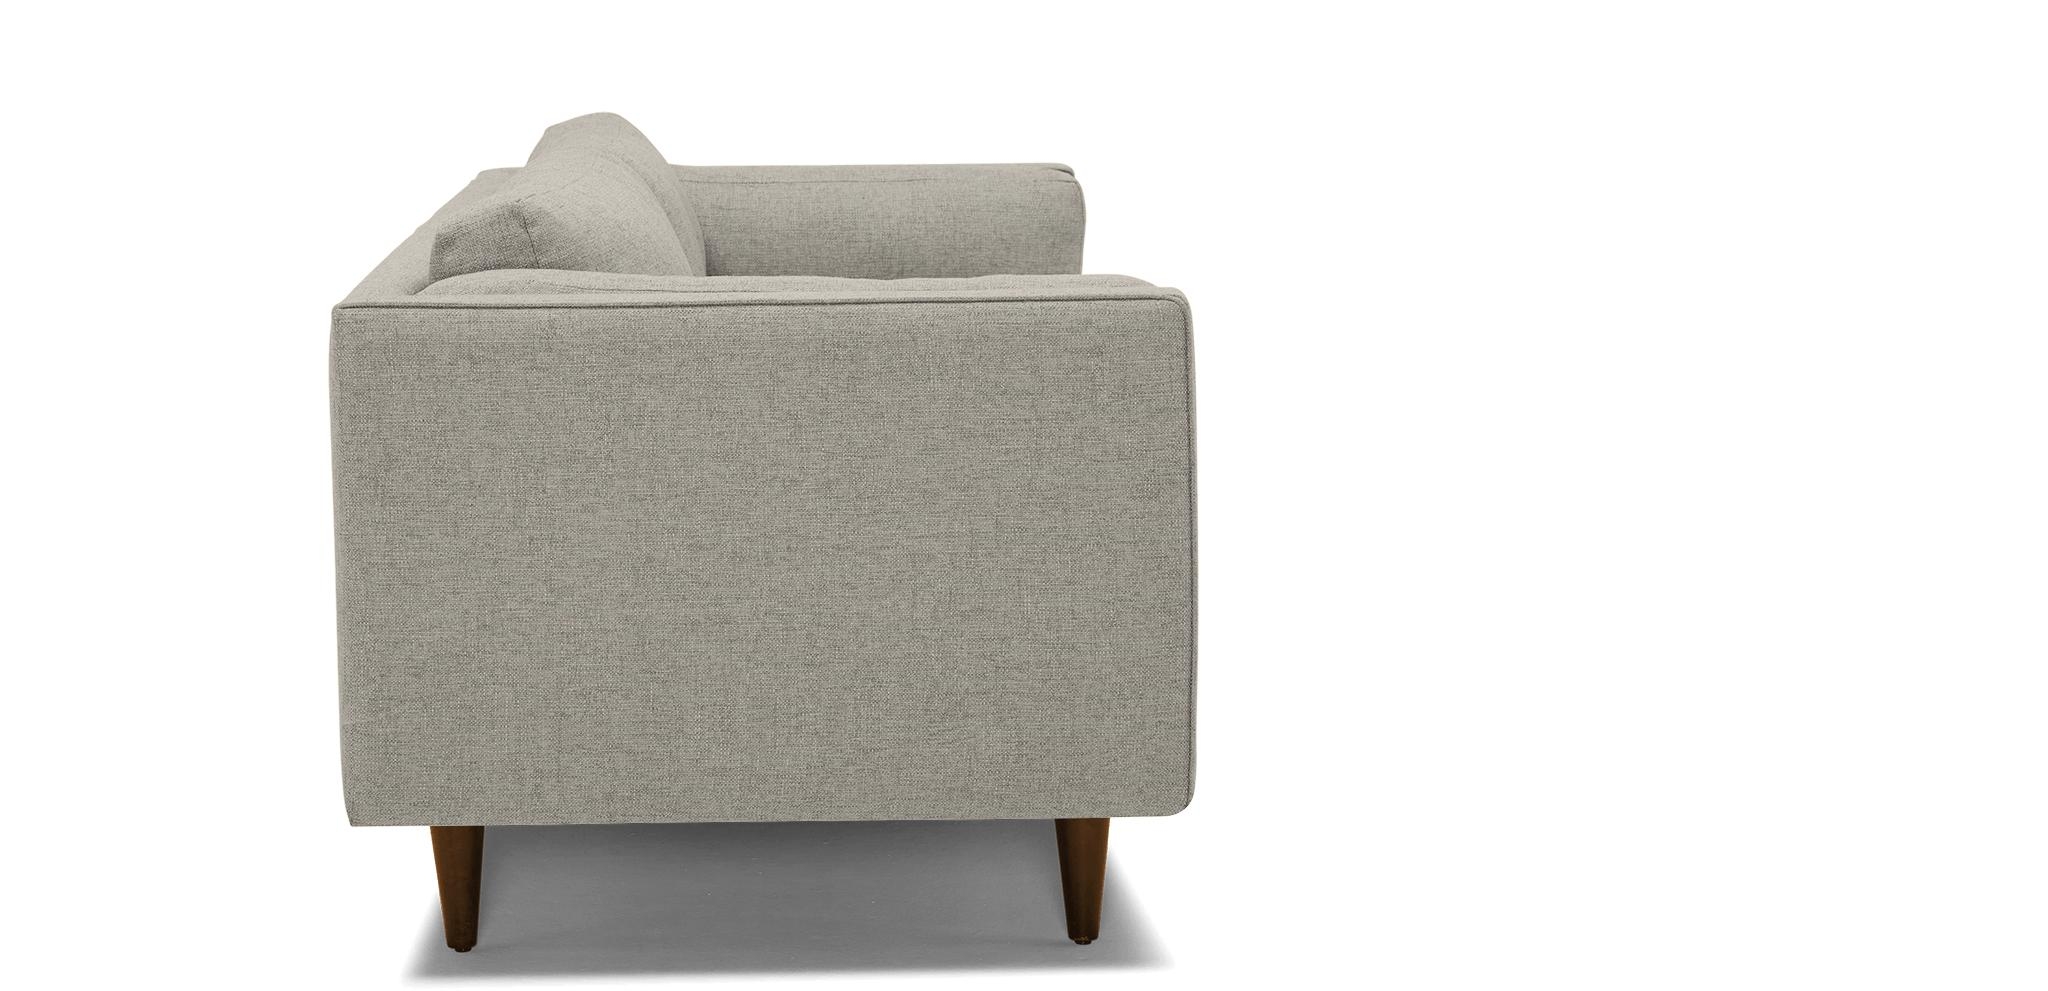 White Parker Mid Century Modern Sofa - Bloke Cotton - Mocha - Image 2